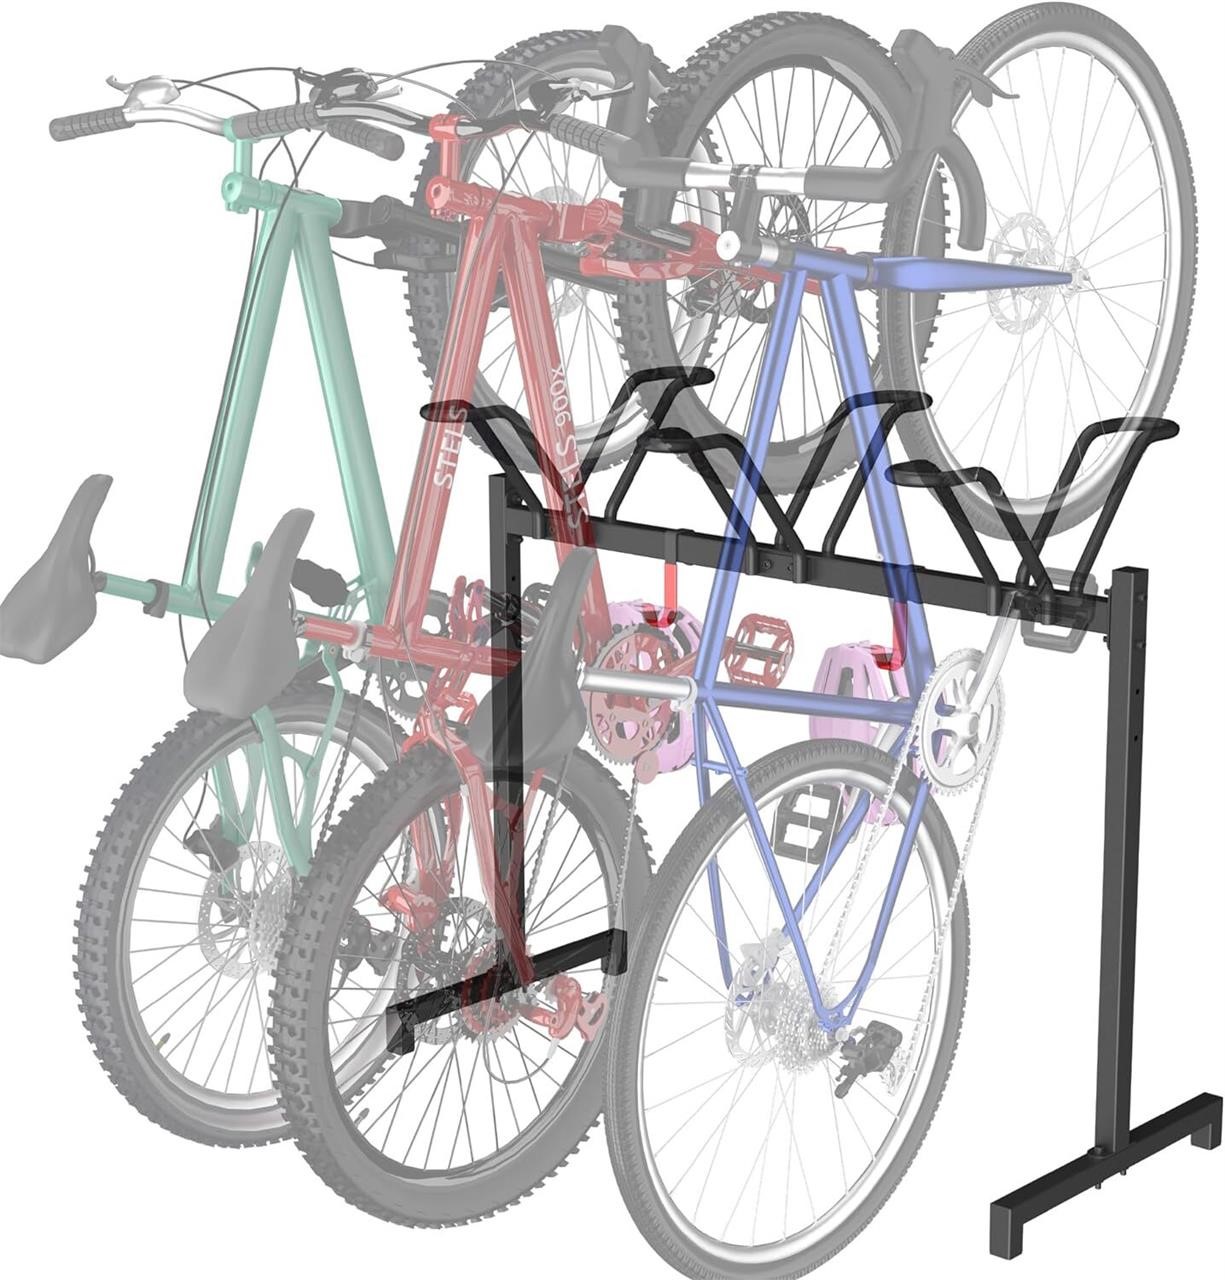 3 Bikes Floor Stand  Adjustable Bicycle Parking Ra